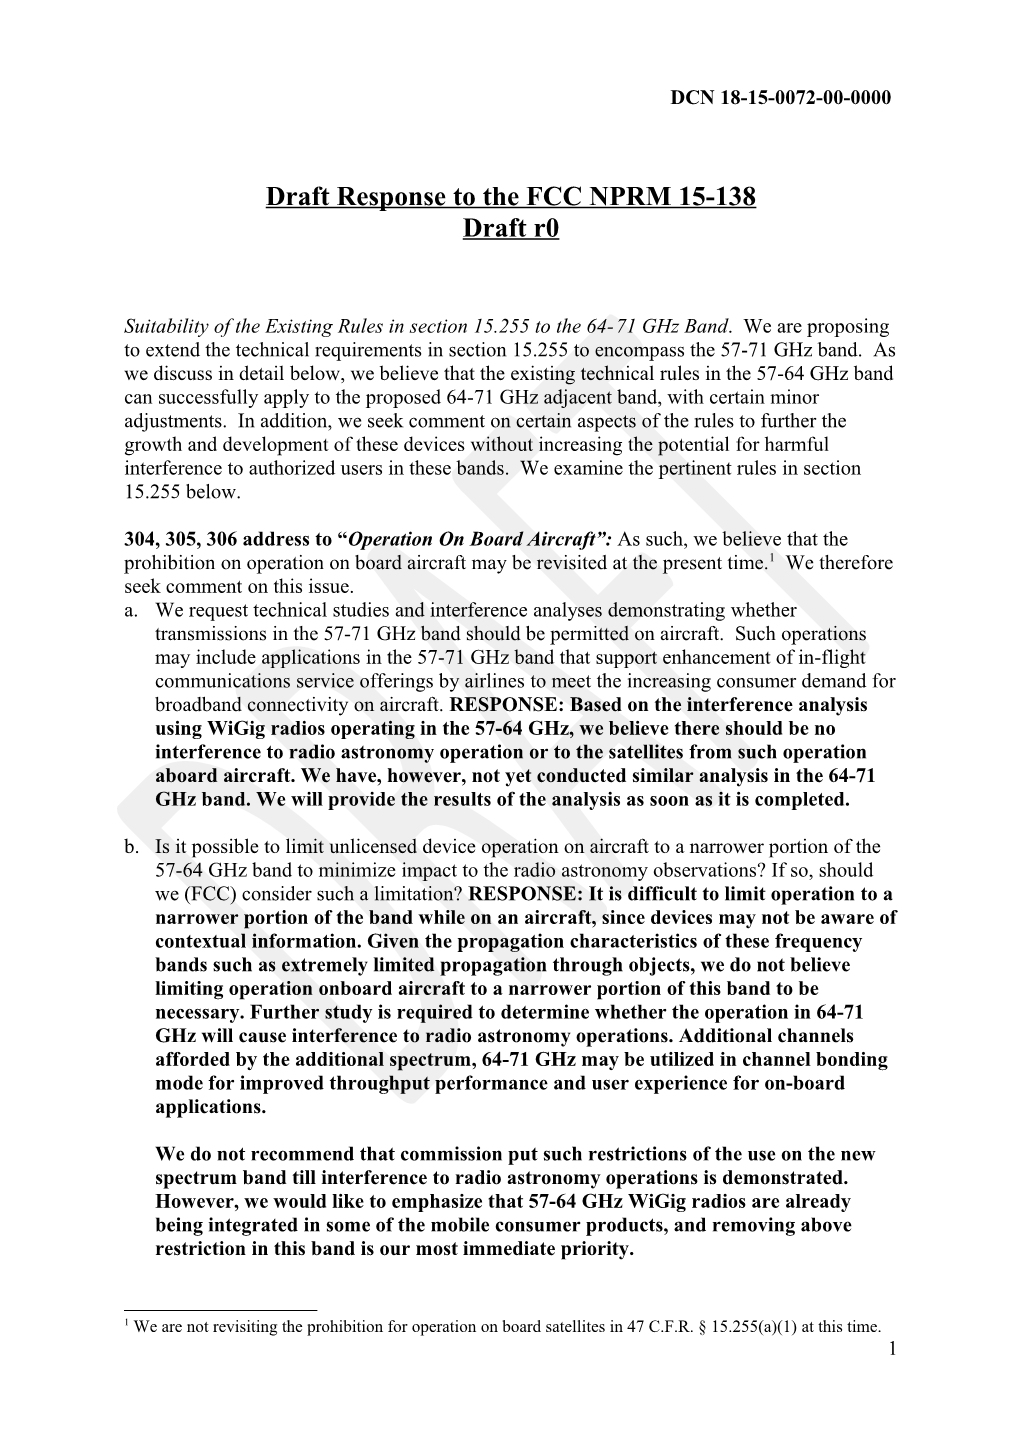 Draft Response to the FCC NPRM 15-138